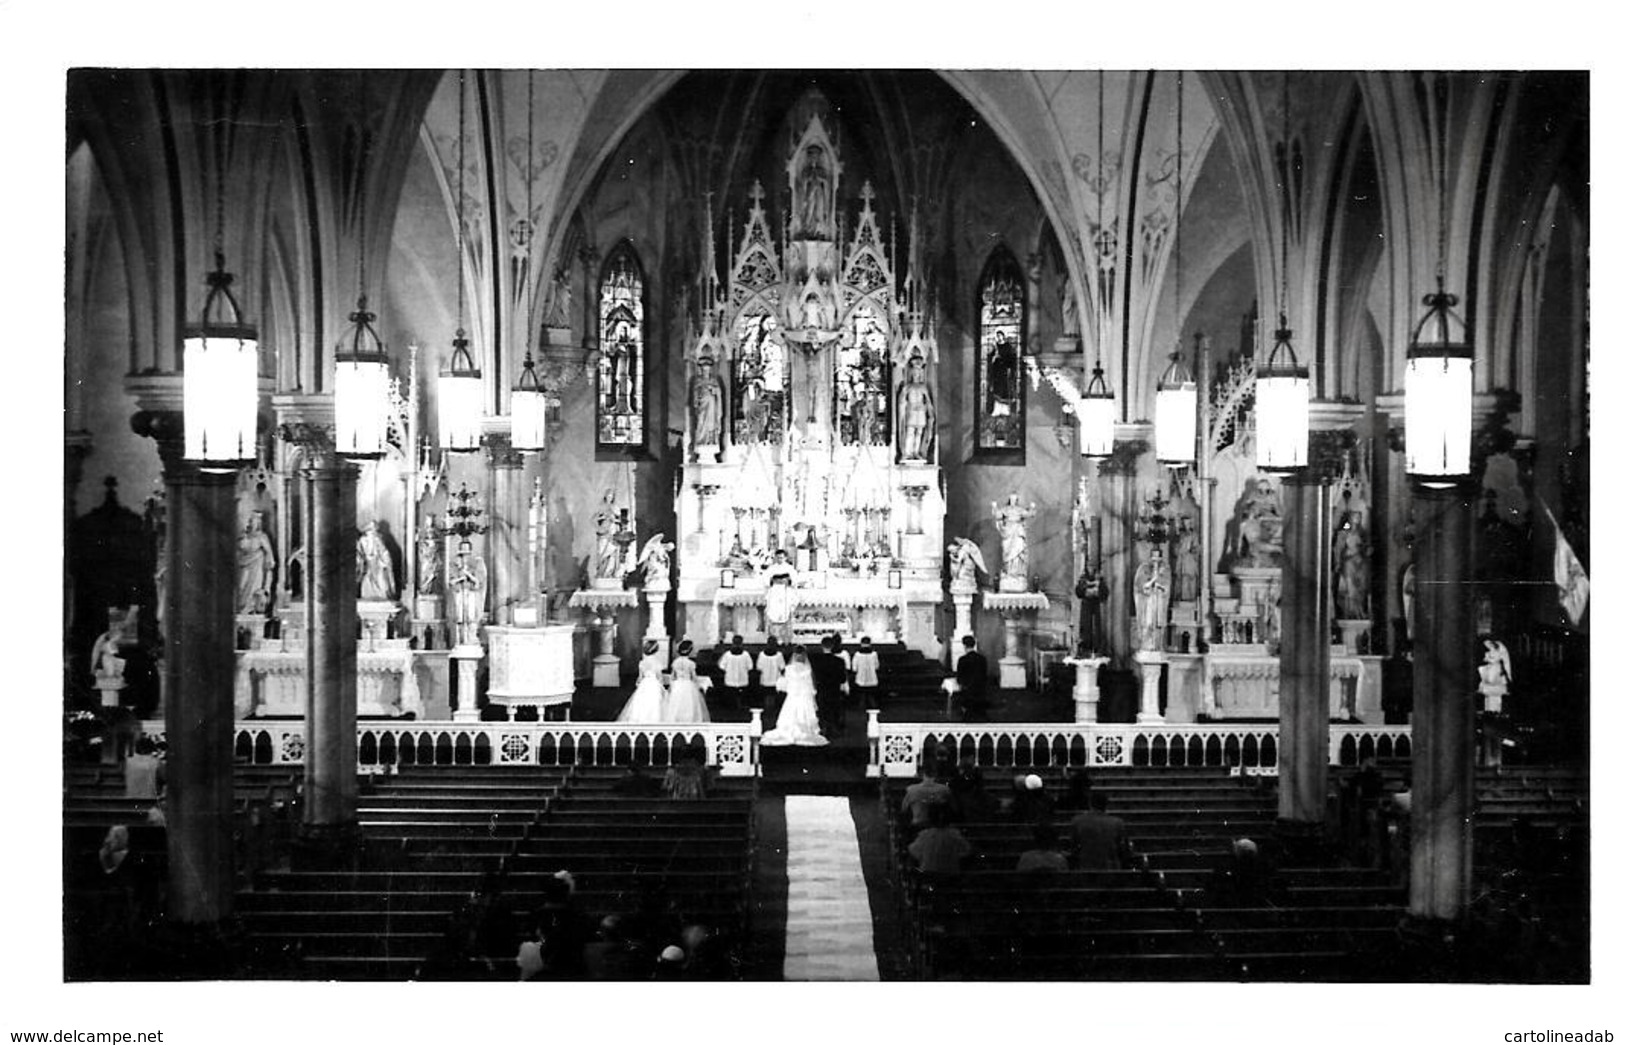 [DC12133] CPA - UNITED STATES - OHIO - CLEVELAND - CONGRATULATION ON YOUR COMING WEDDING - Viaggiata 1957 - Cleveland